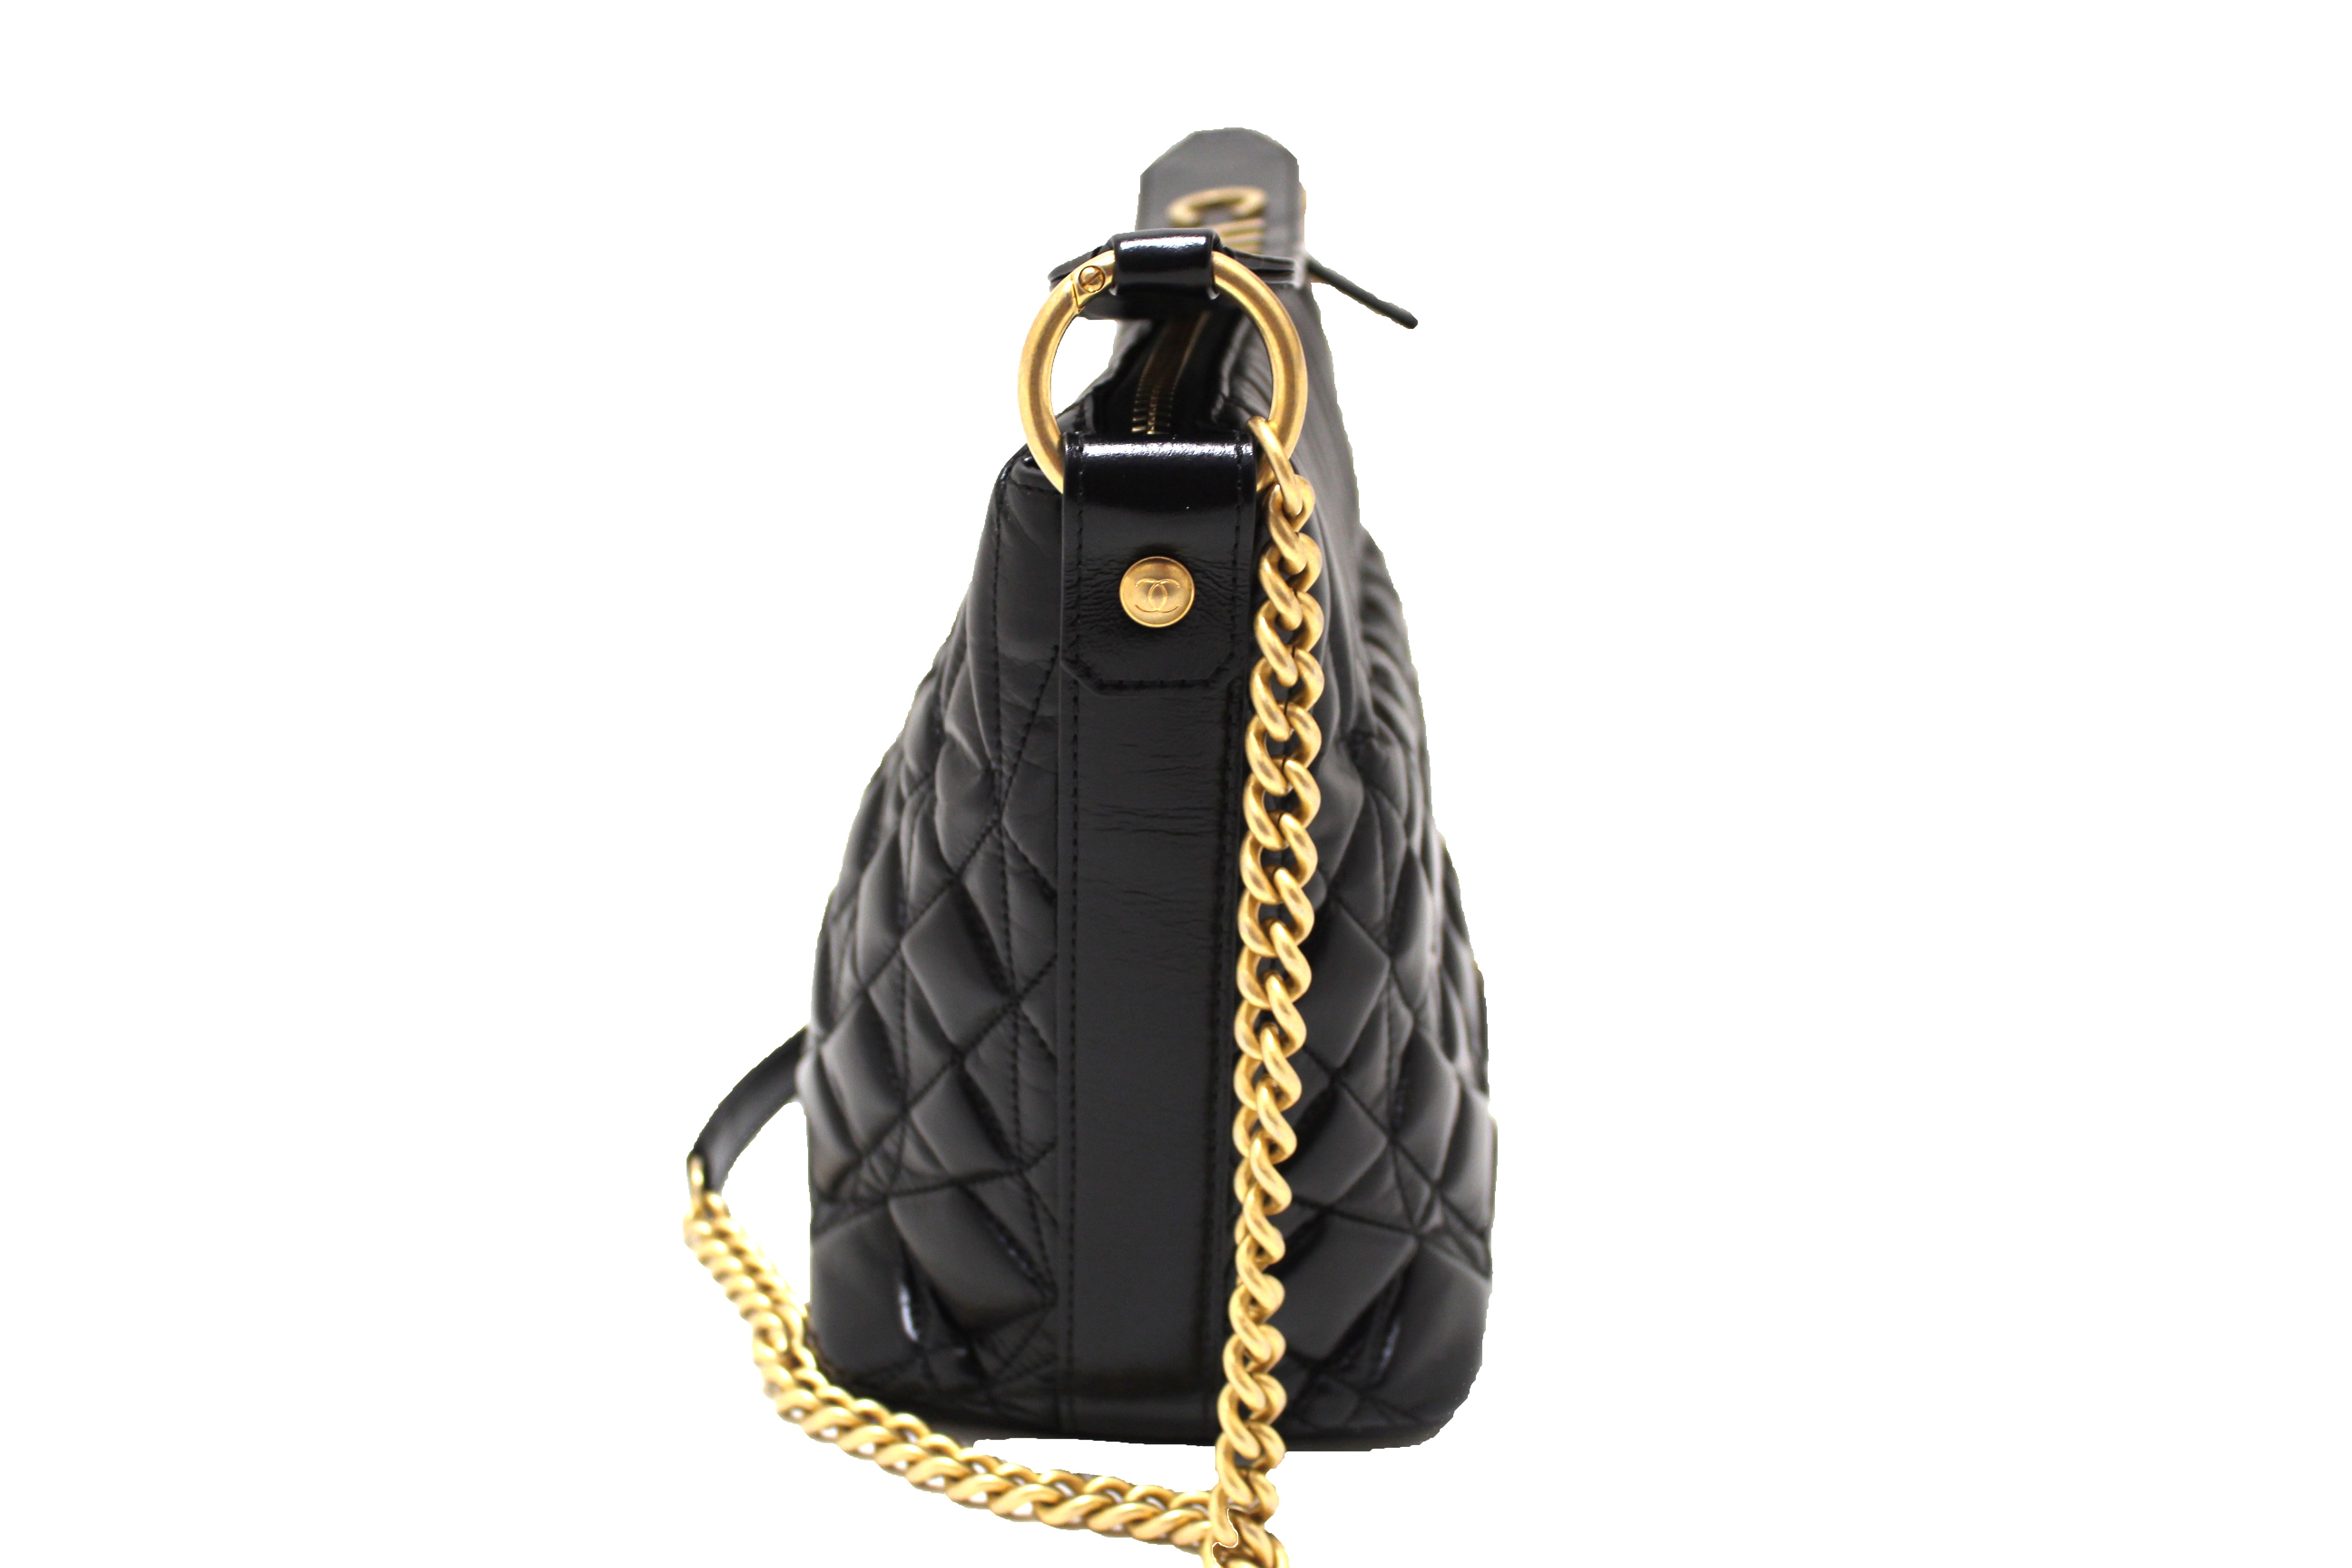 Chanel Woven Hobo Bags for Women